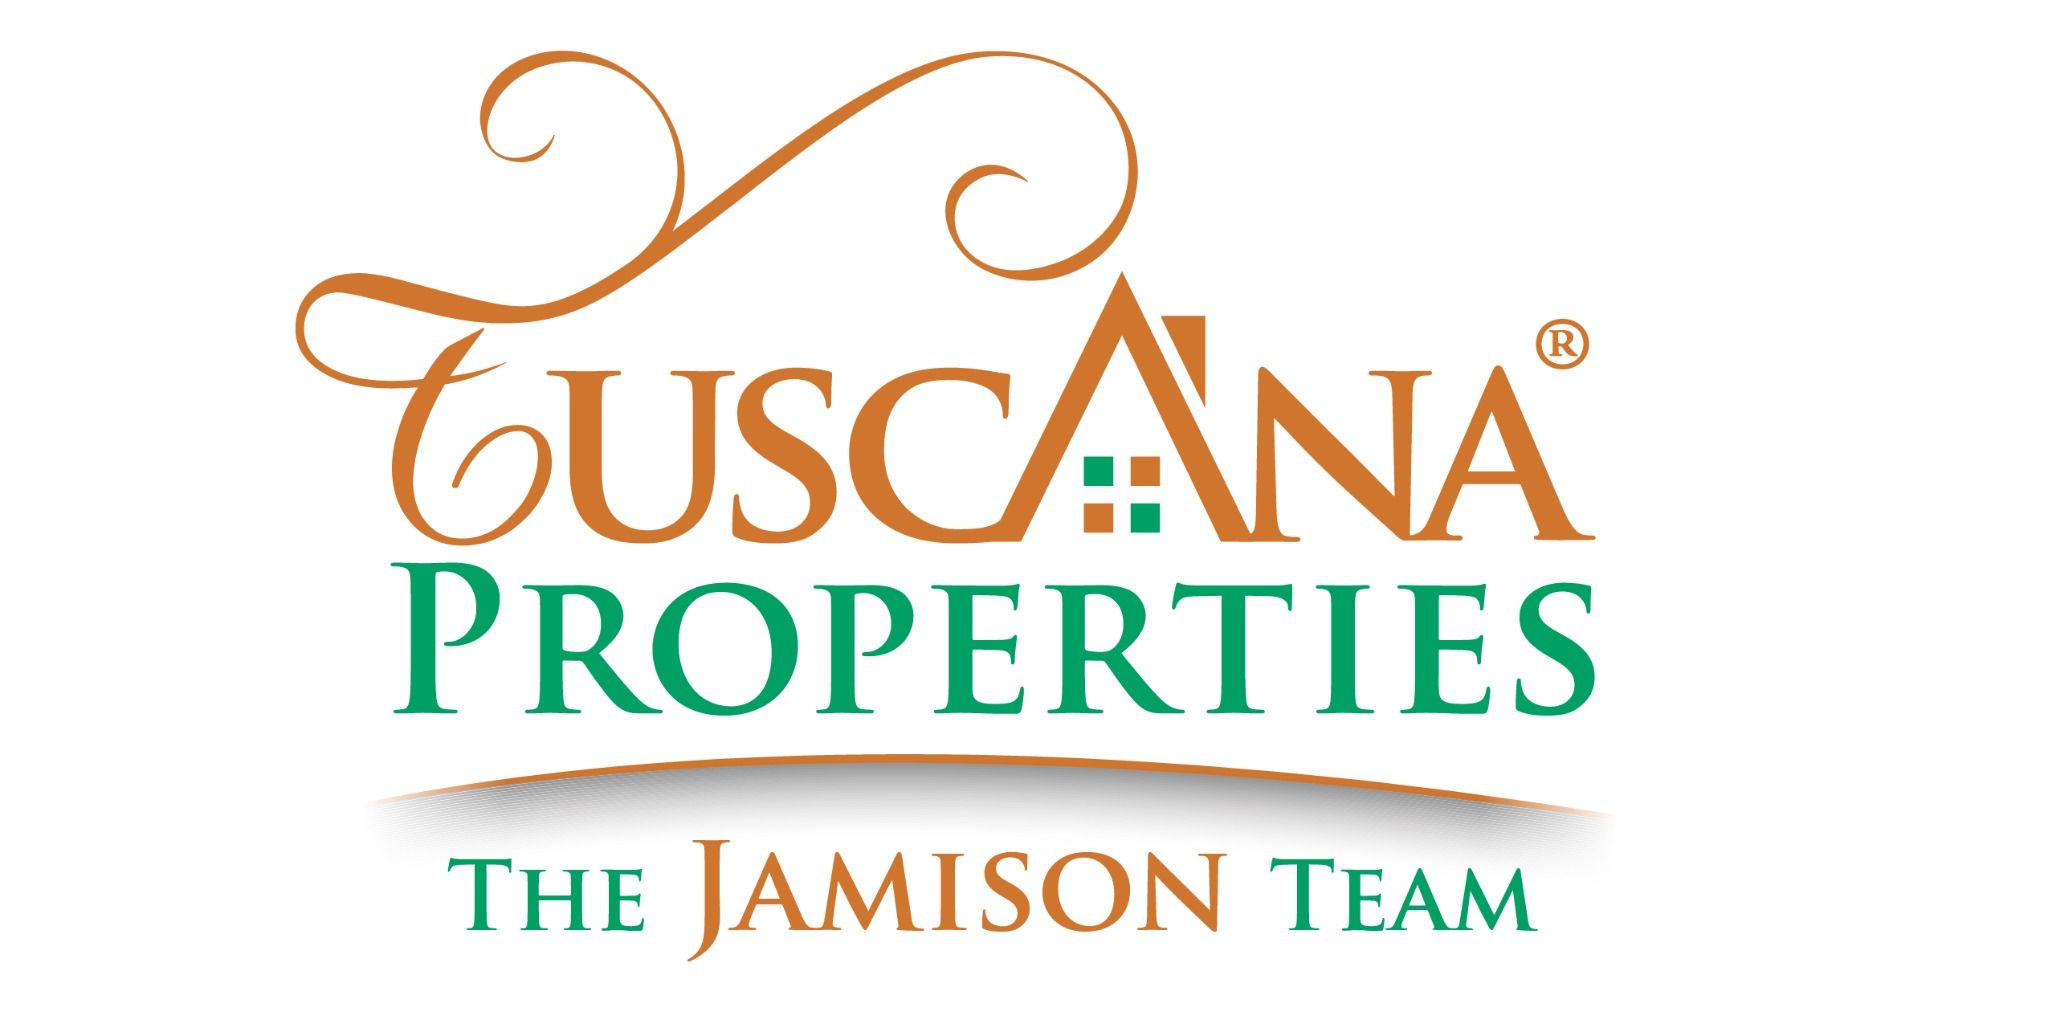 The Jamison Team - Tuscana Properties